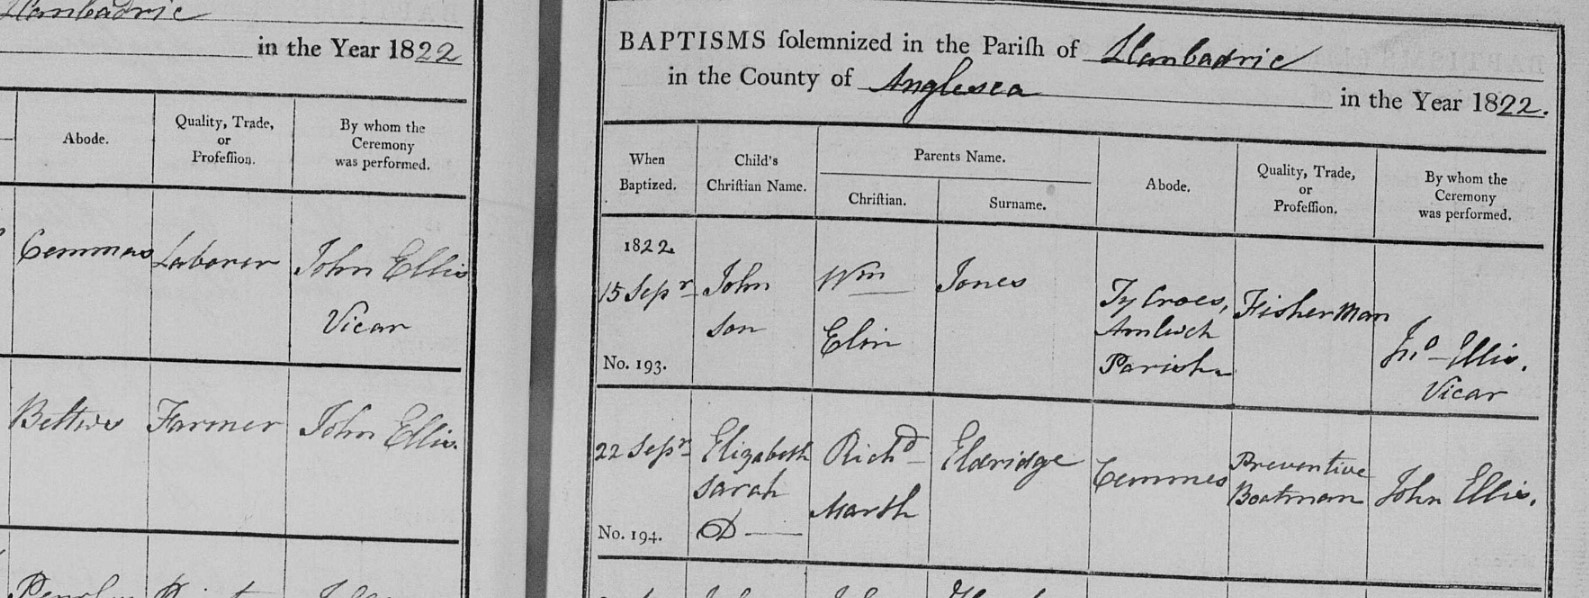 Baptised Elizabeth Sarah Eldridge 22 Sep 1822 PR